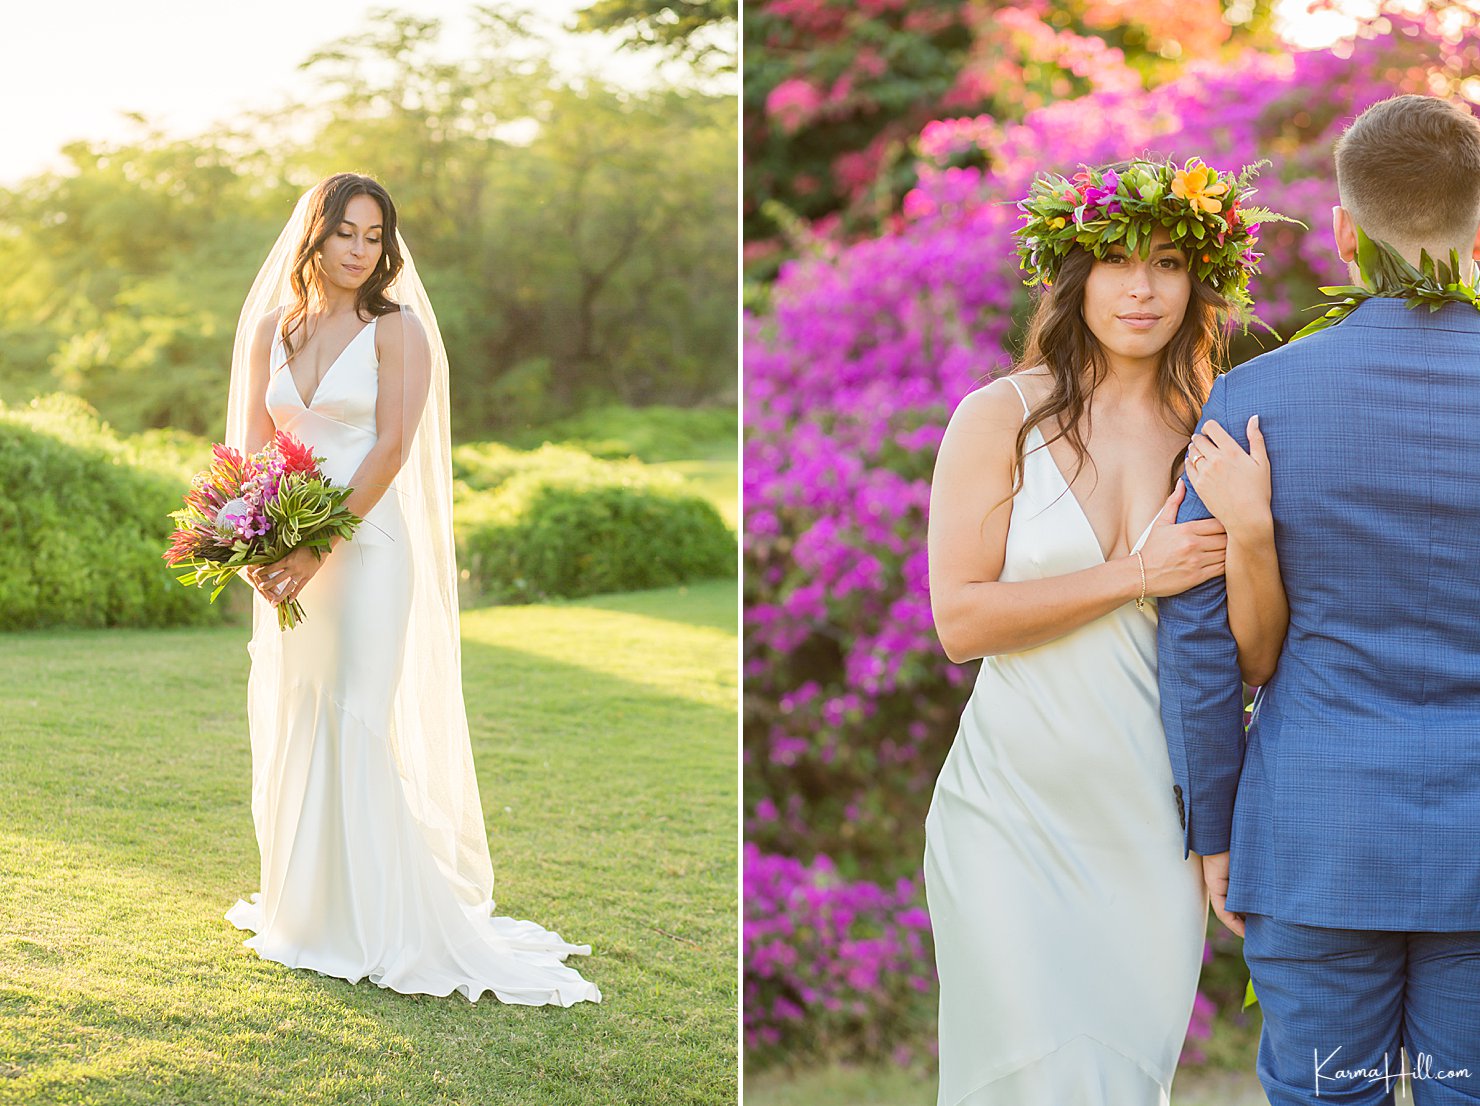 Top 5 Maui Beach Wedding Dress Styles - Tropical Inspiration